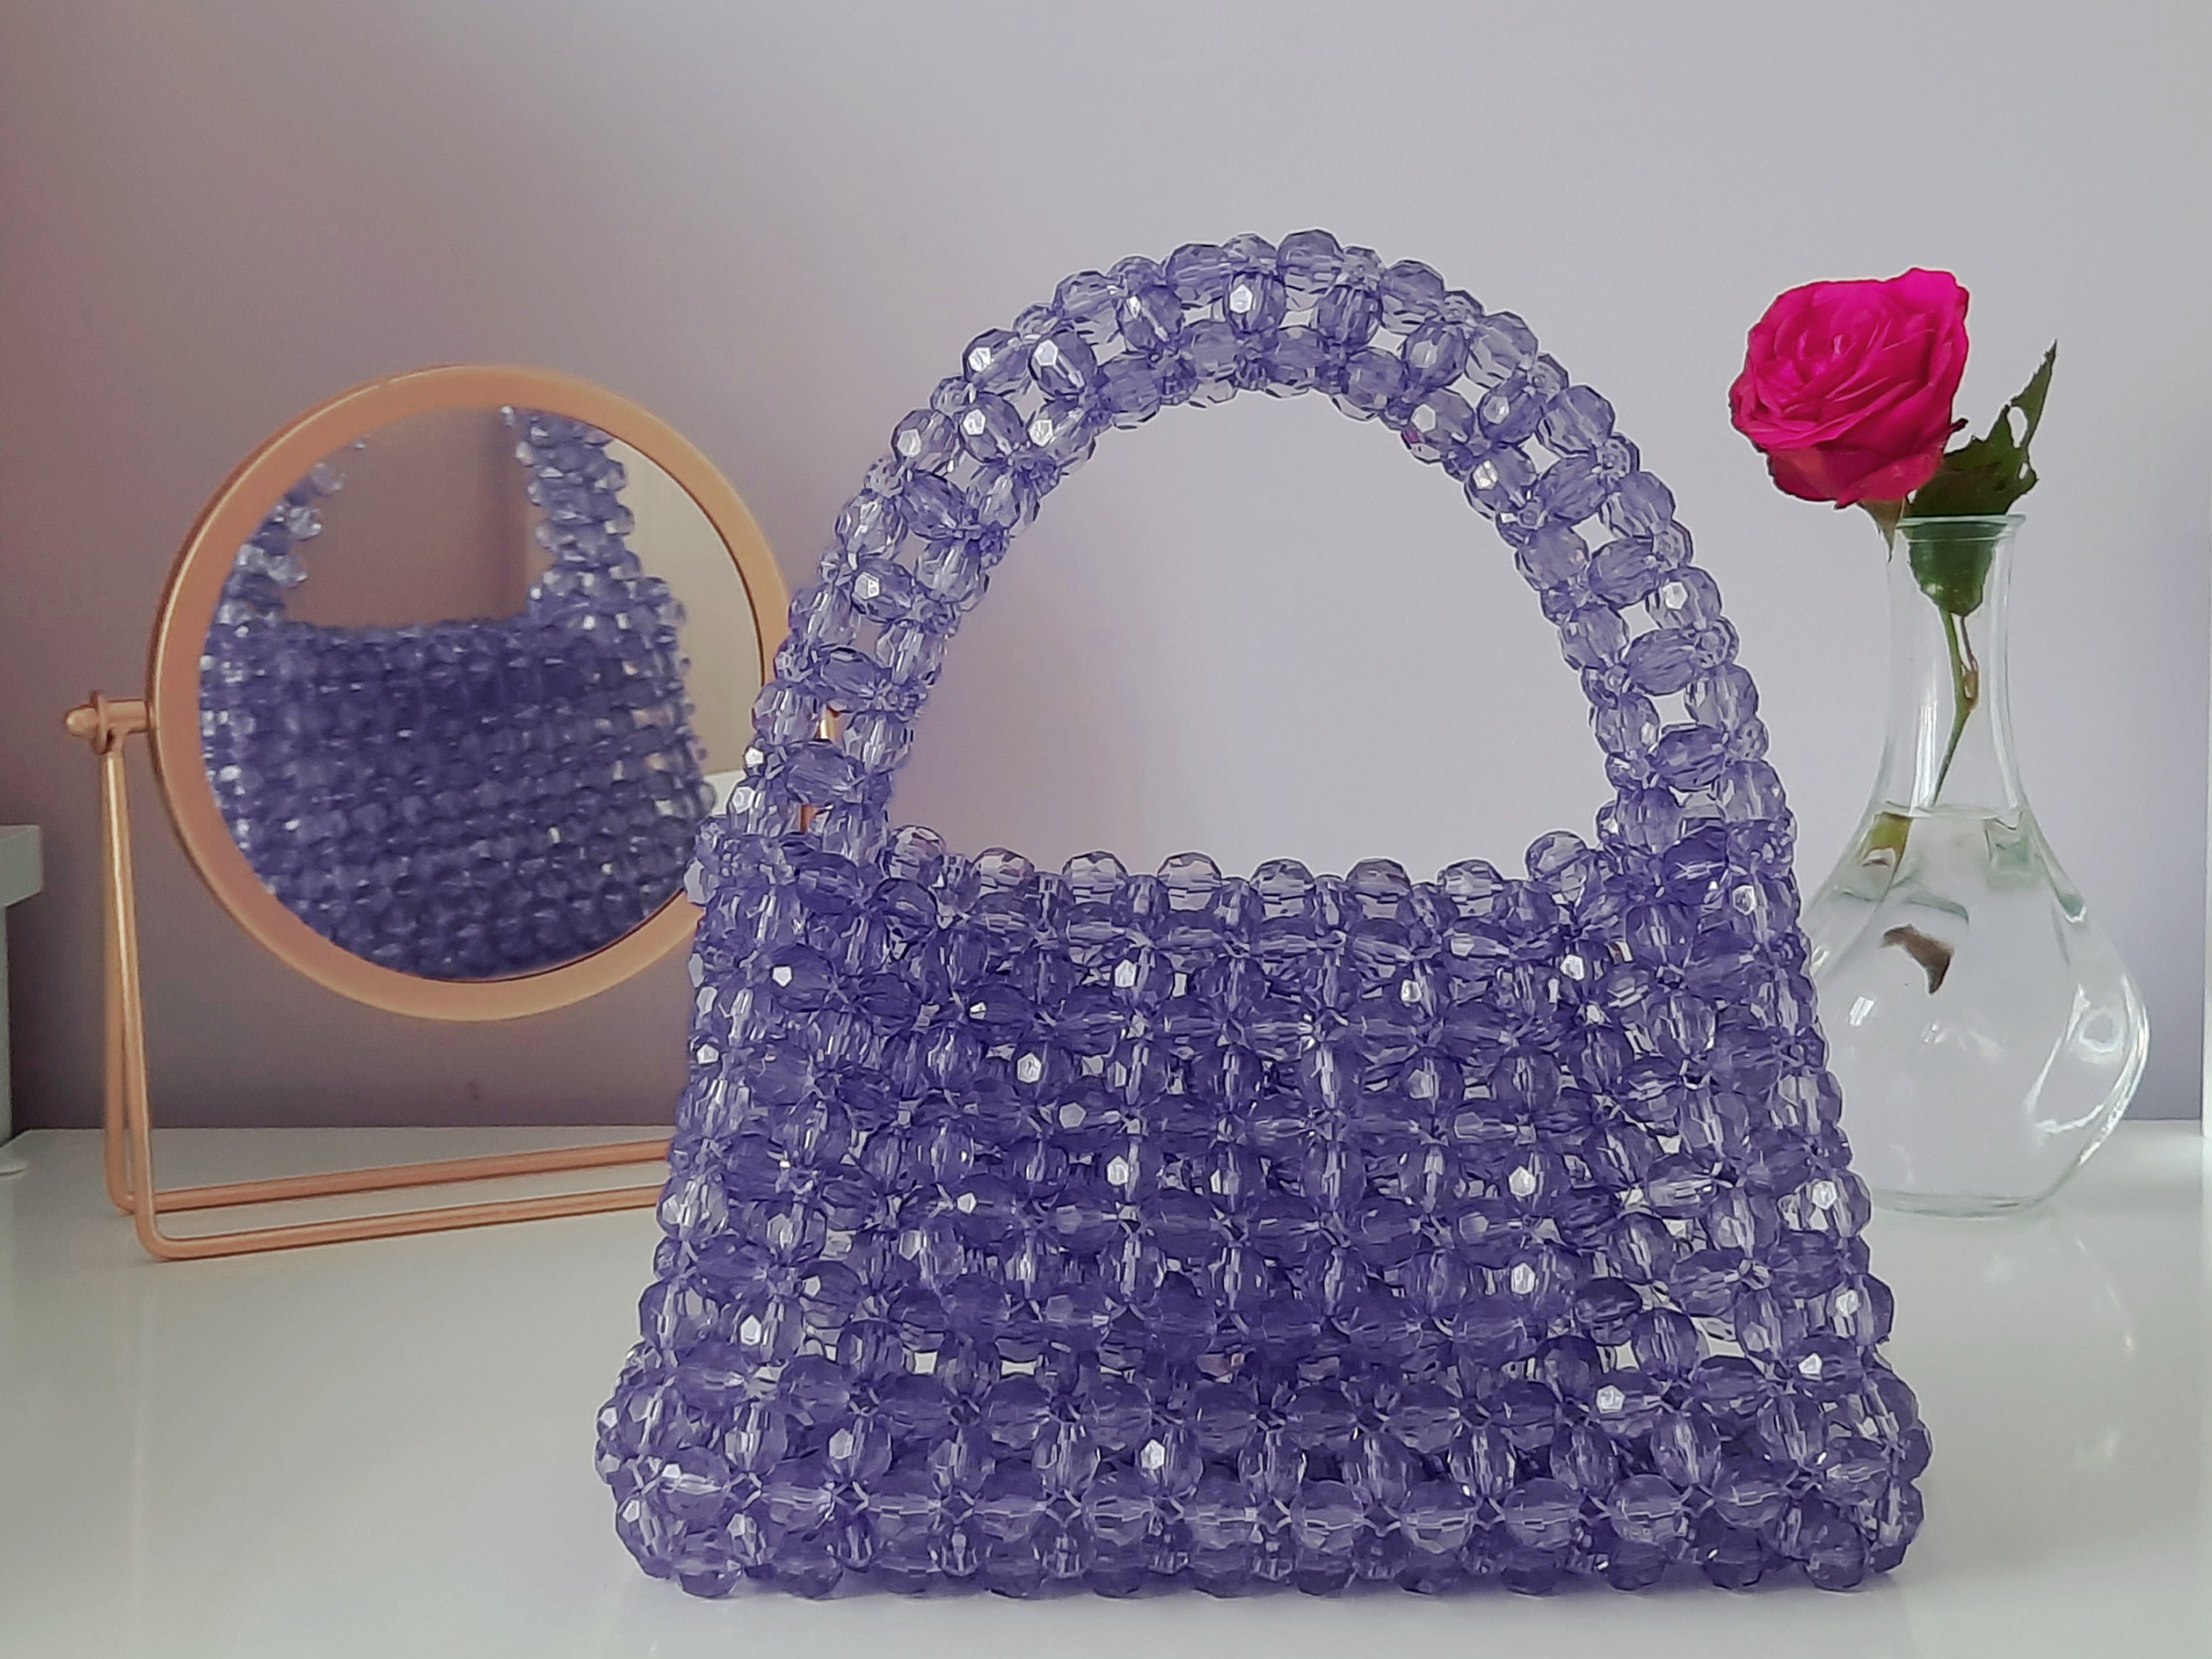 Cariedo Acrylic Handbag Luxury Transparent Clear Clutch Bag for Women Evening Bag Handbag Purse